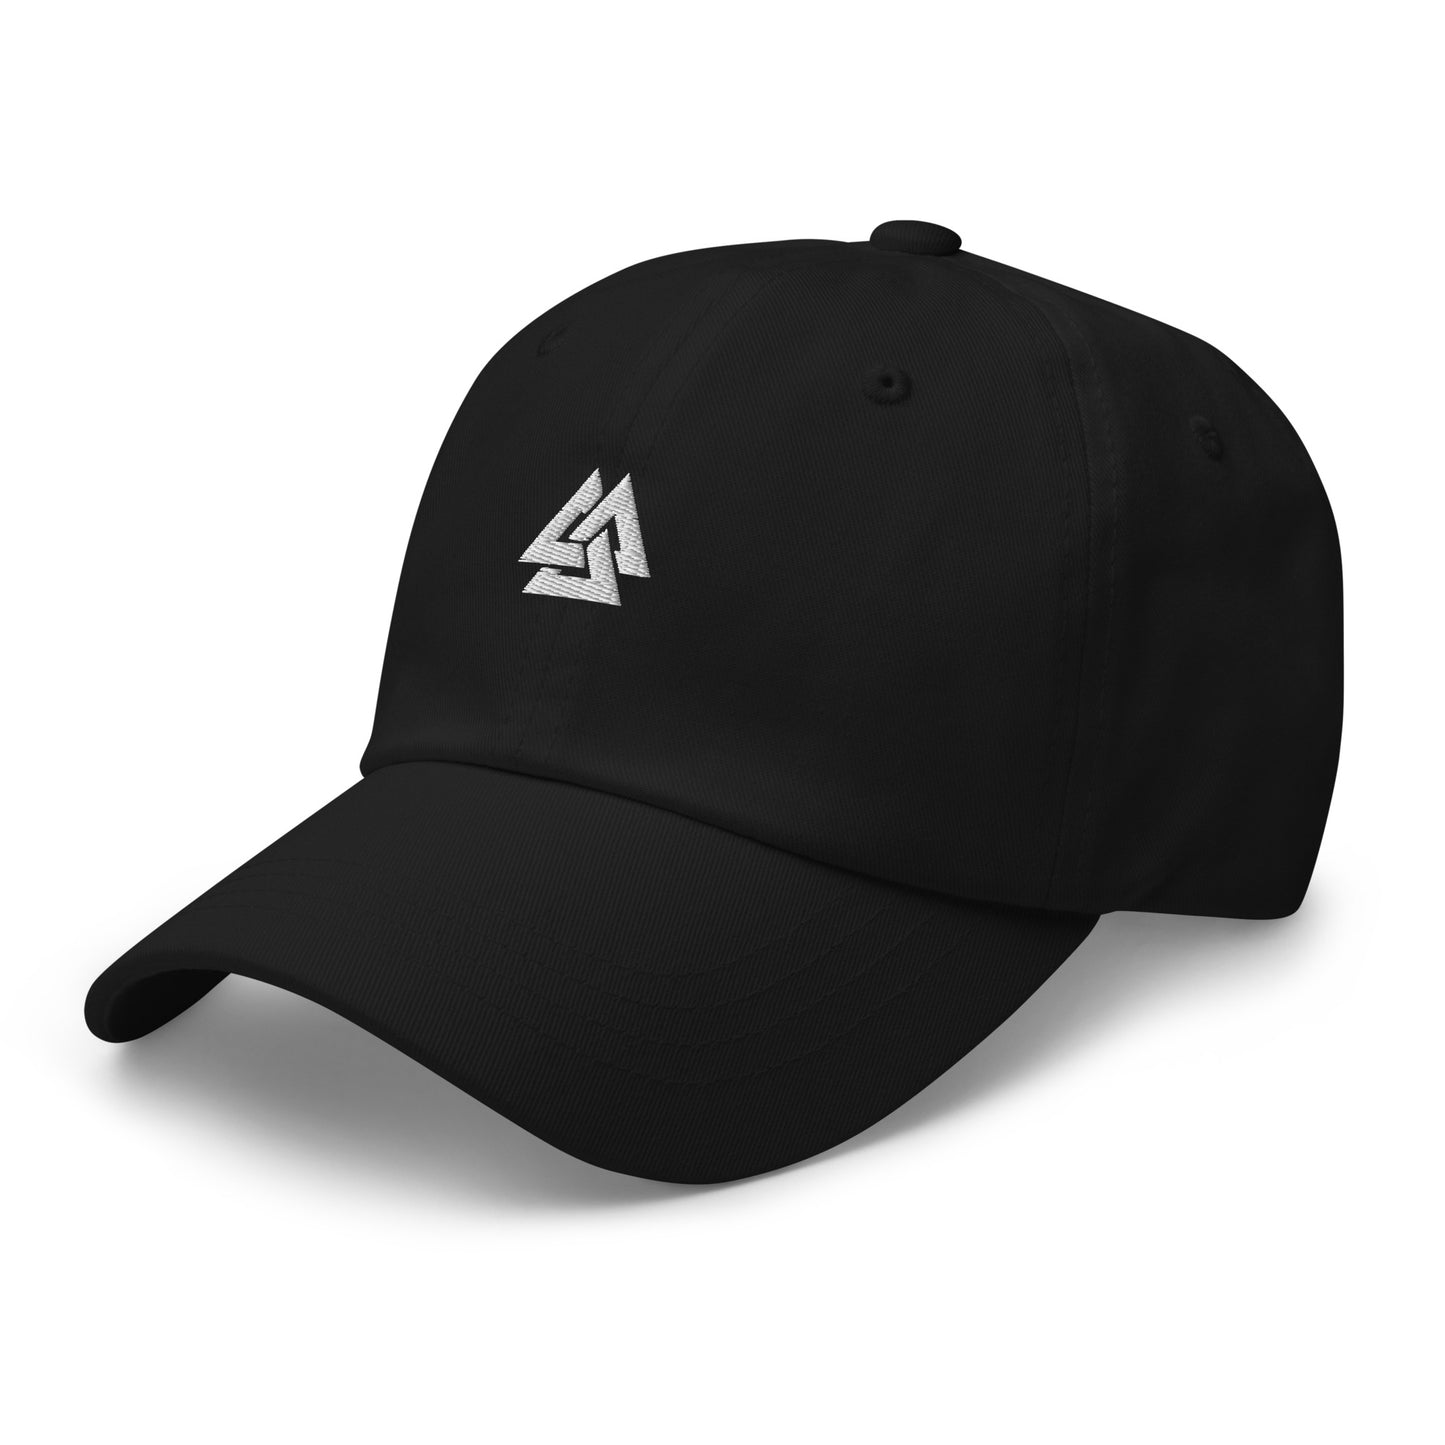 Alpine Icon Dark Baseball Caps